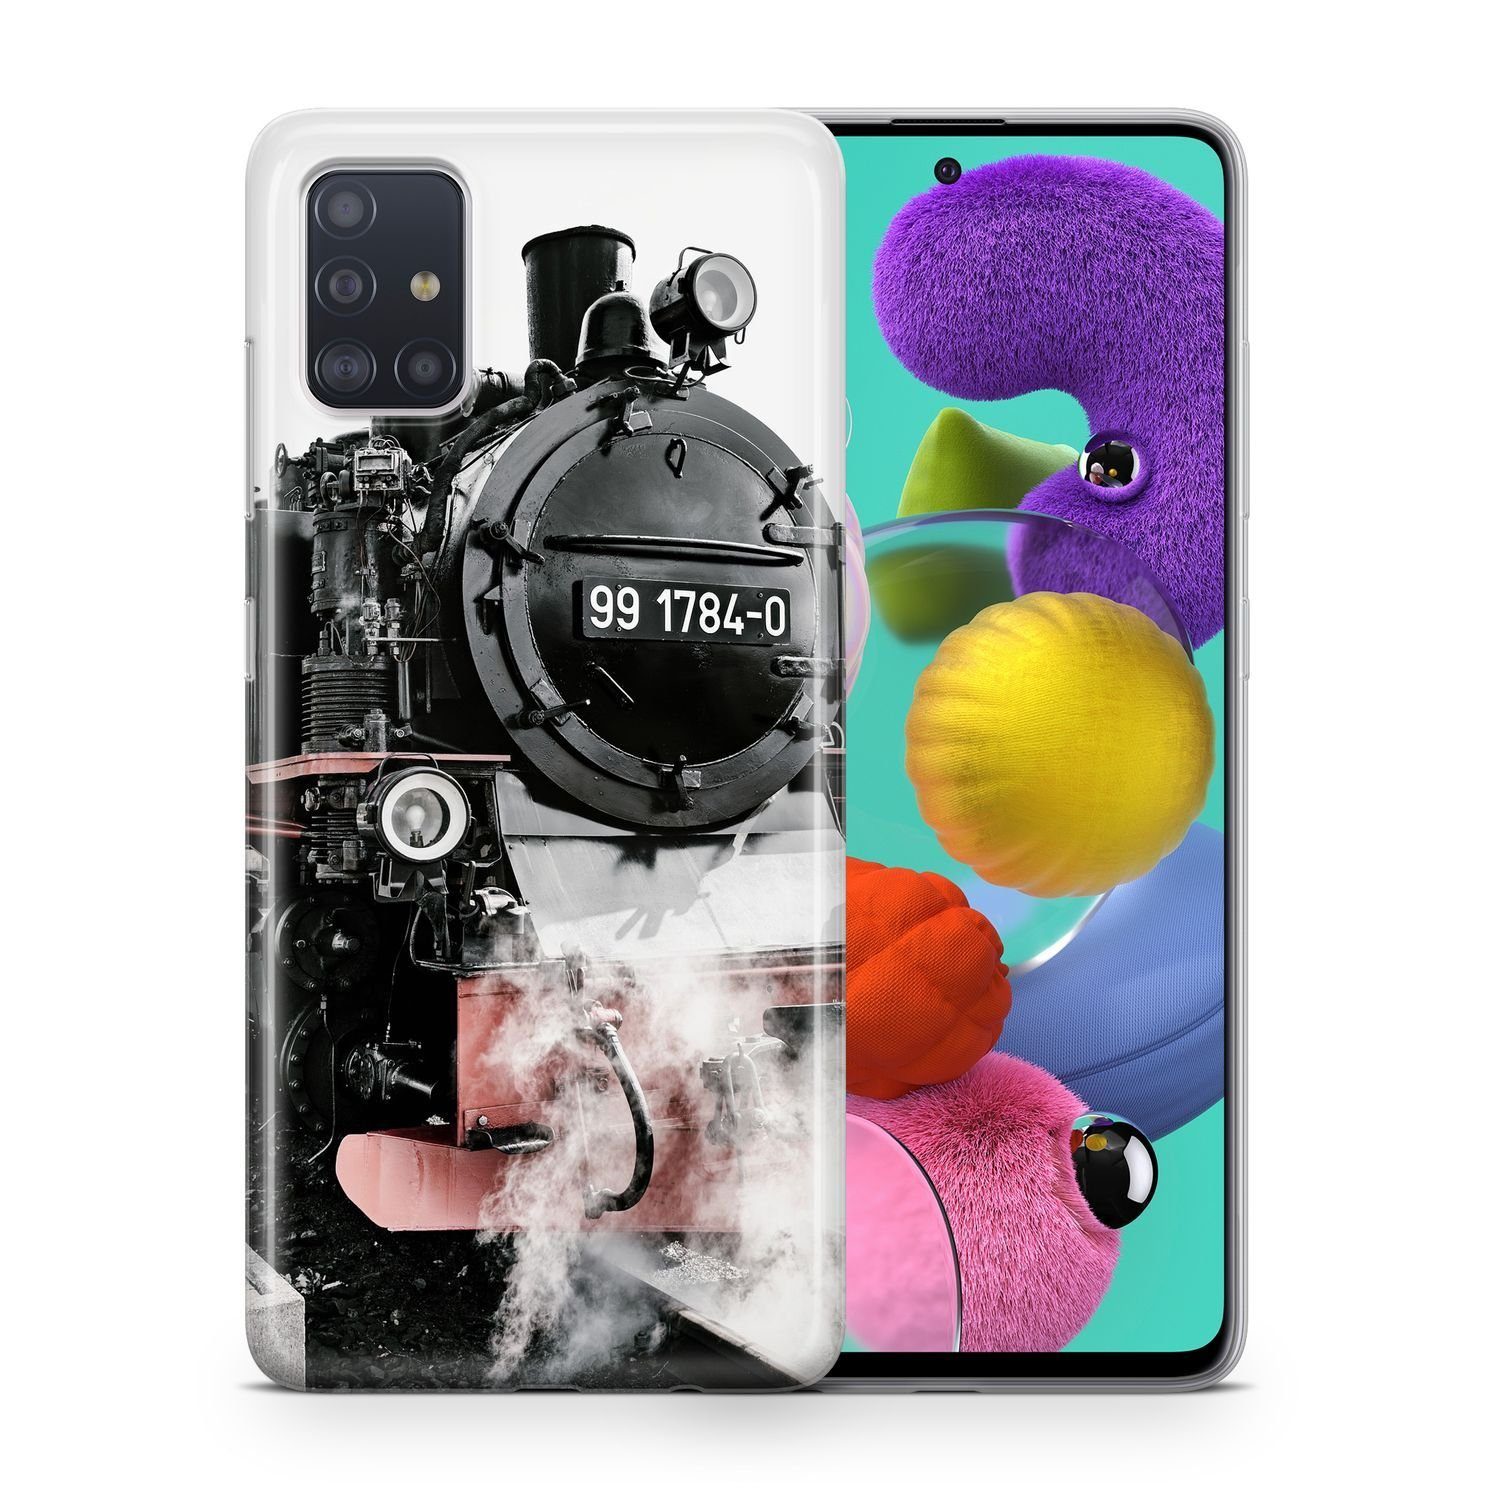 König Design Handyhülle Huawei P8 Lite 2017, Schutzhülle für Huawei P8 Lite  2017 Motiv Handy Hülle Silikon Tasche Case Cover Cannabis